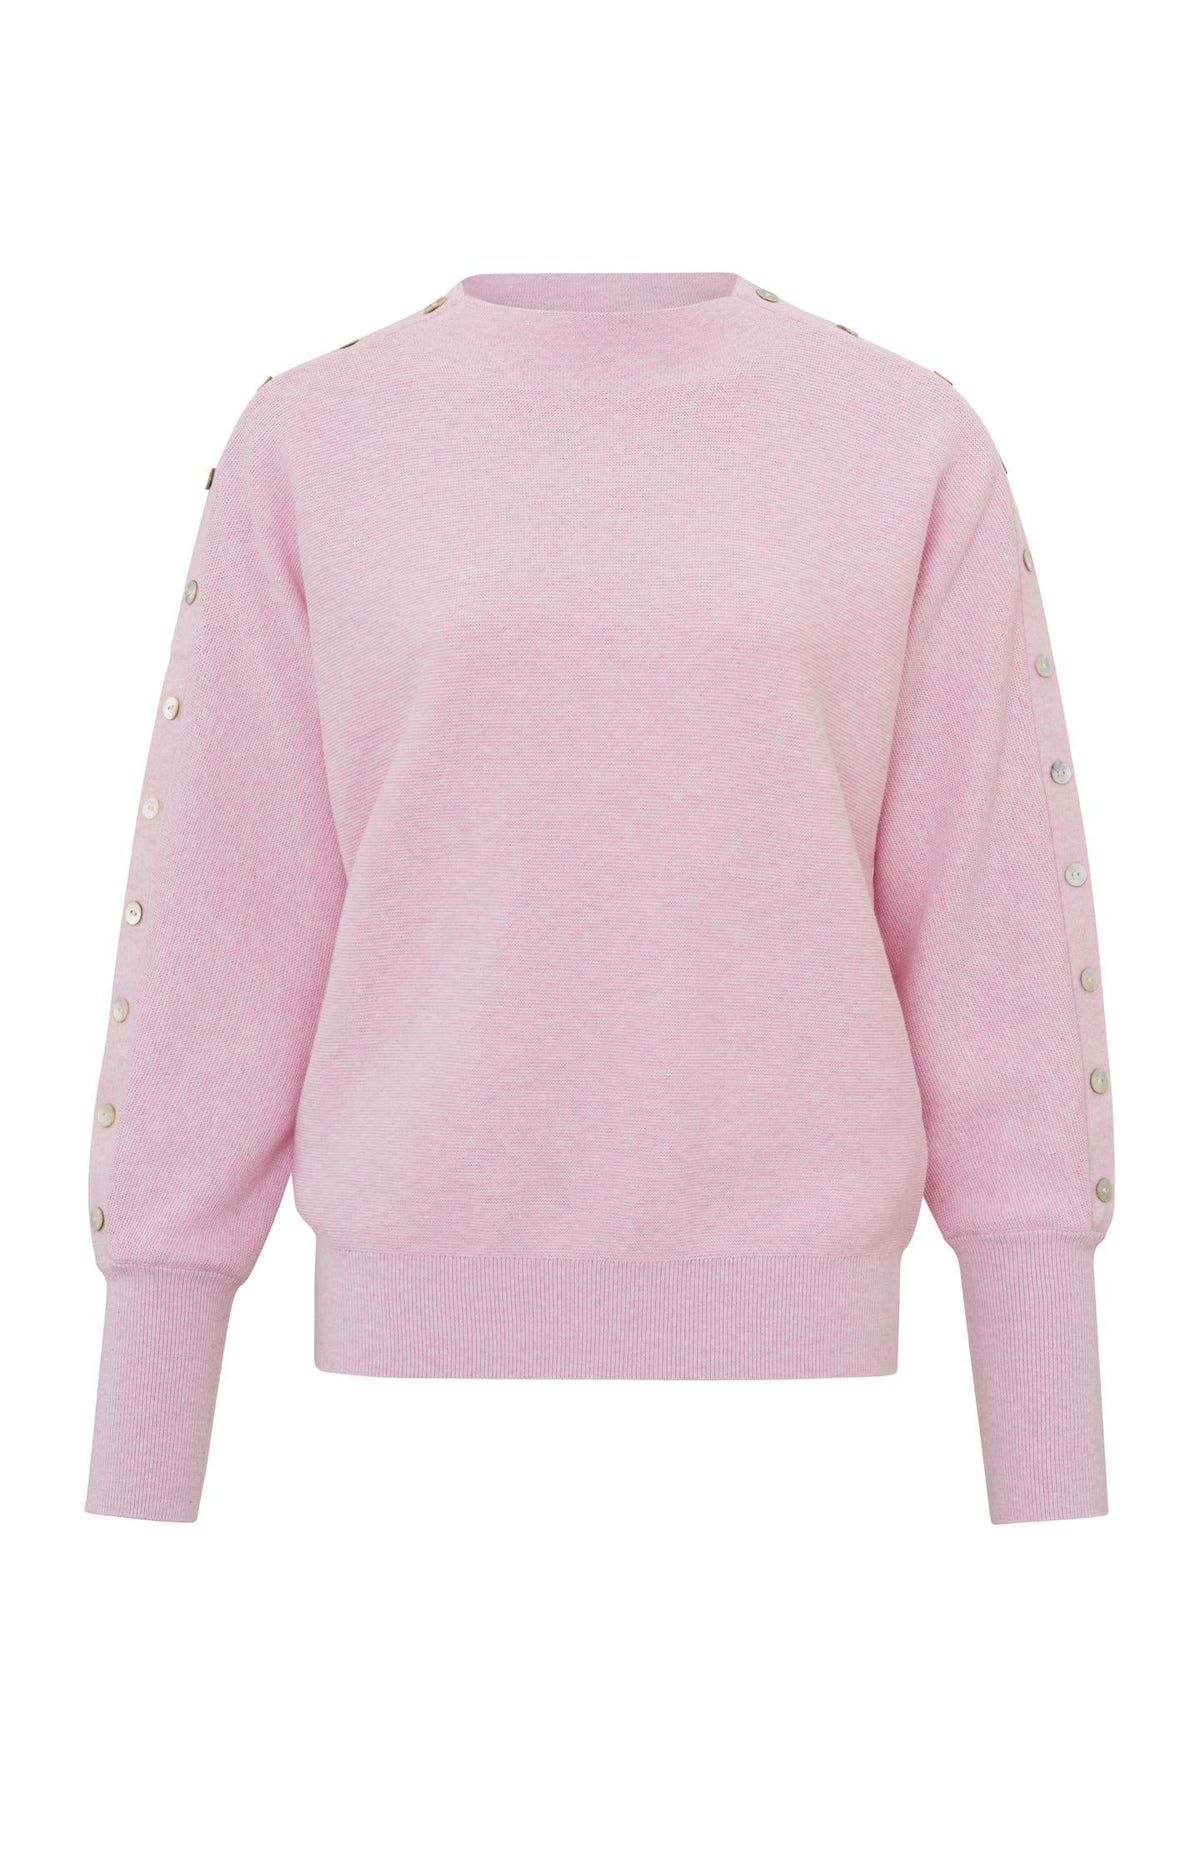 YaYa | Boatneck Sweater | Long Sleeves | Button Details | Lady Pink Melange